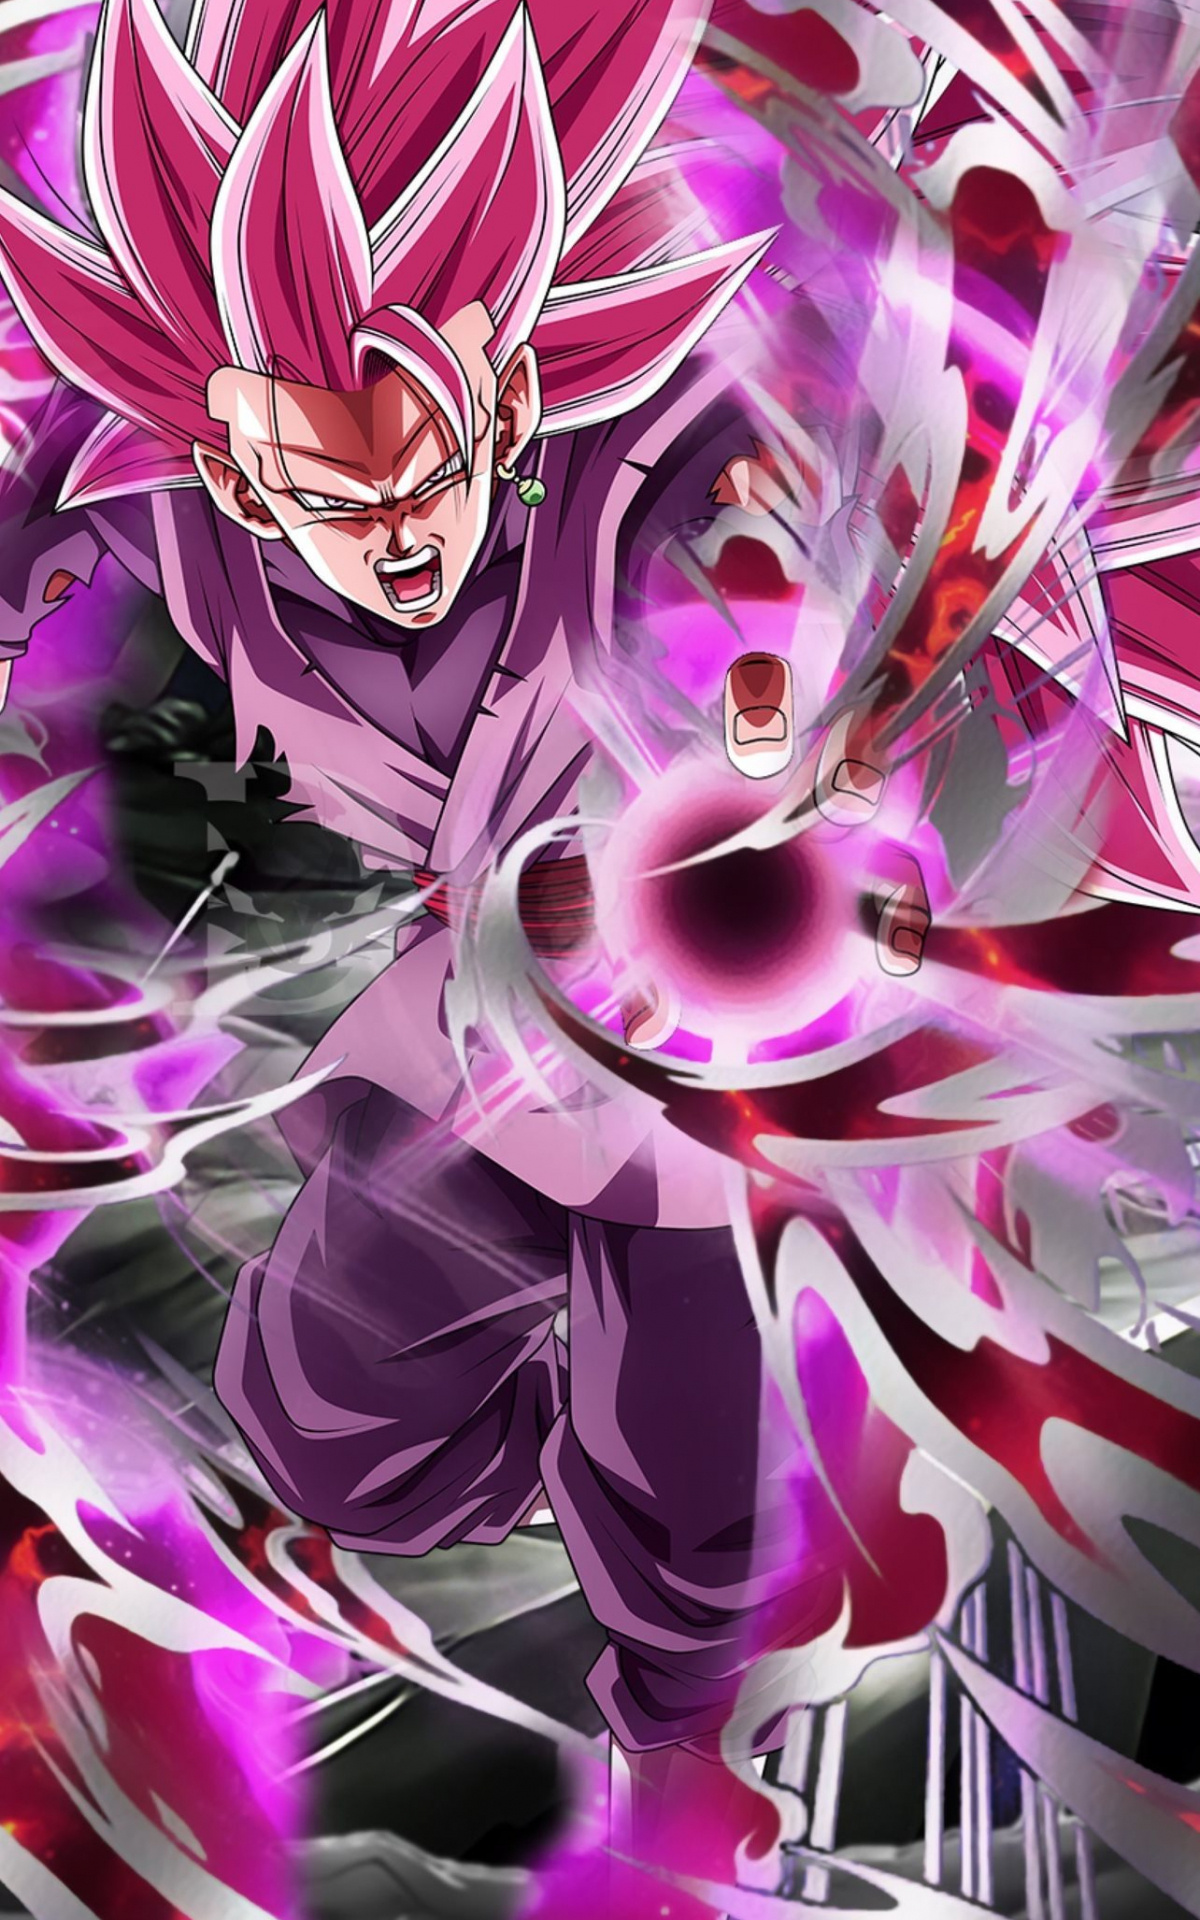 Black Goku's power, Mobile wallpapers, Dark transformations, Epic battles, 1200x1920 HD Handy